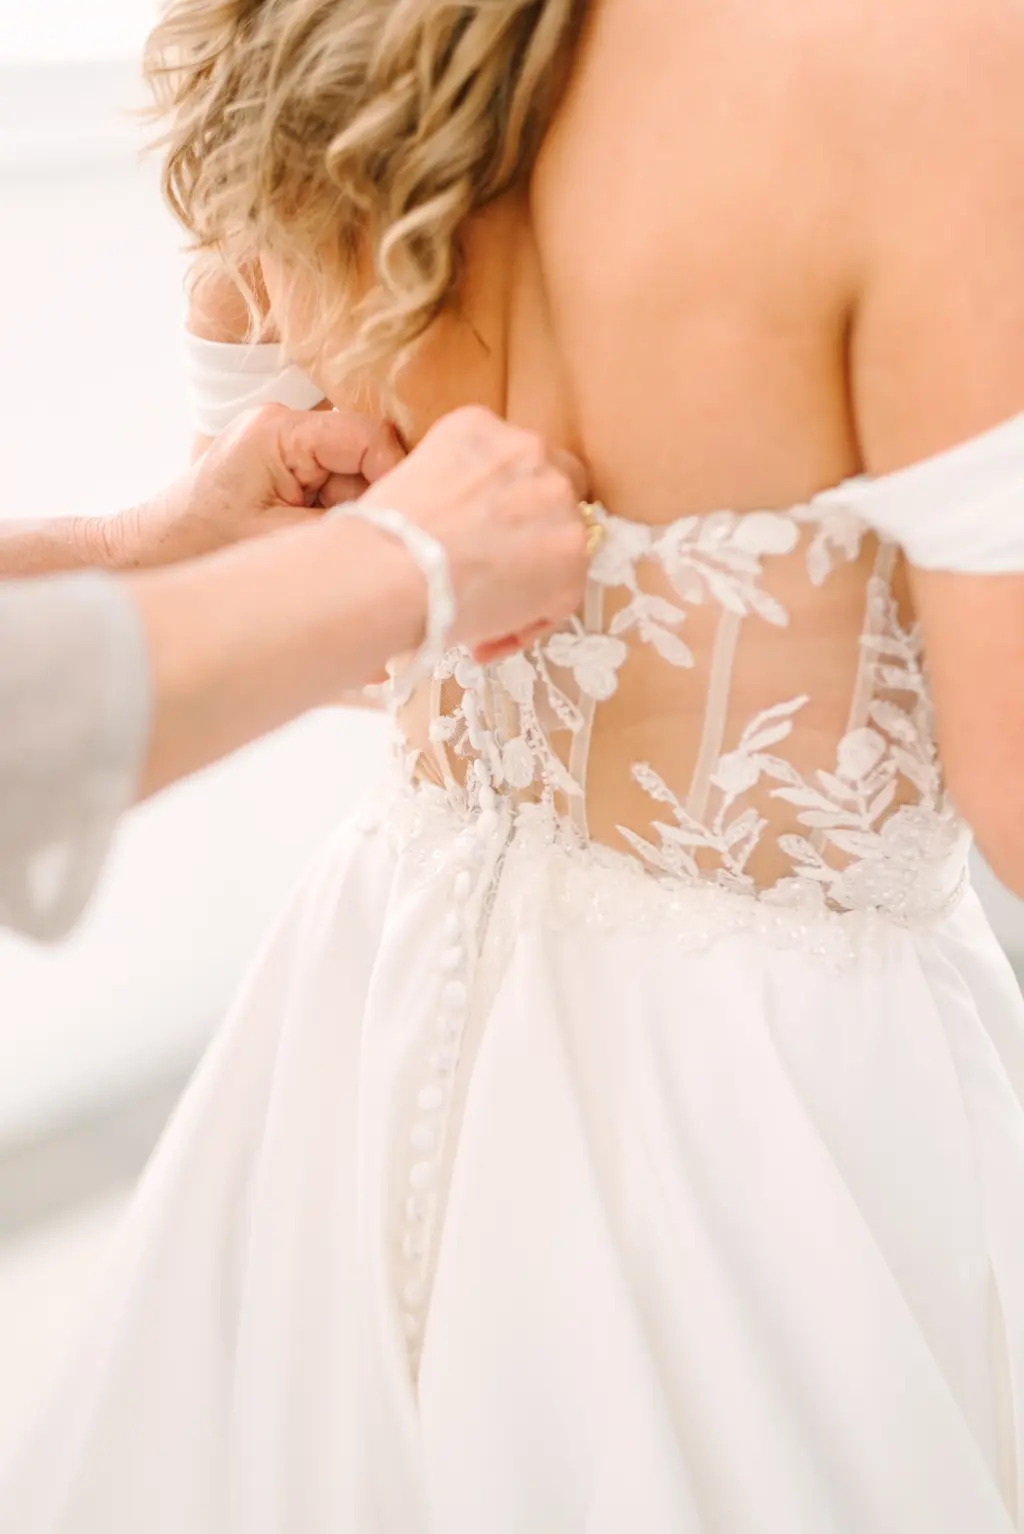 Sheer Bodice with Floral Applique Ivory A-Line Eddy K Bridal Wedding Dress Ideas